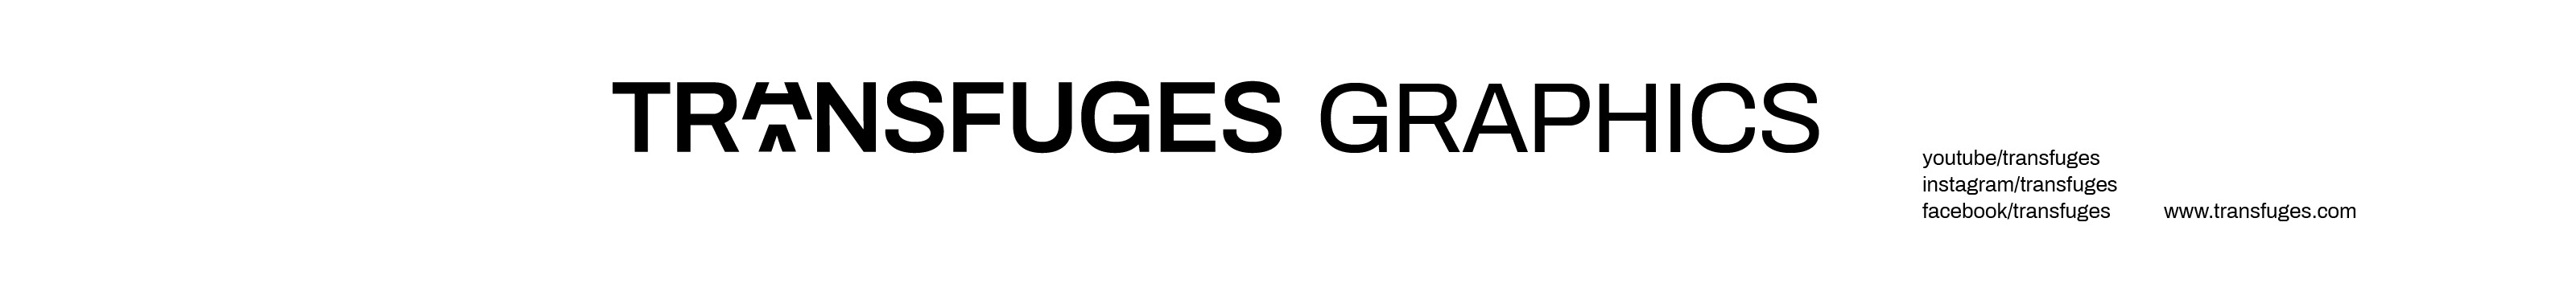 TRANSFUGES GRAPHICS's profile banner